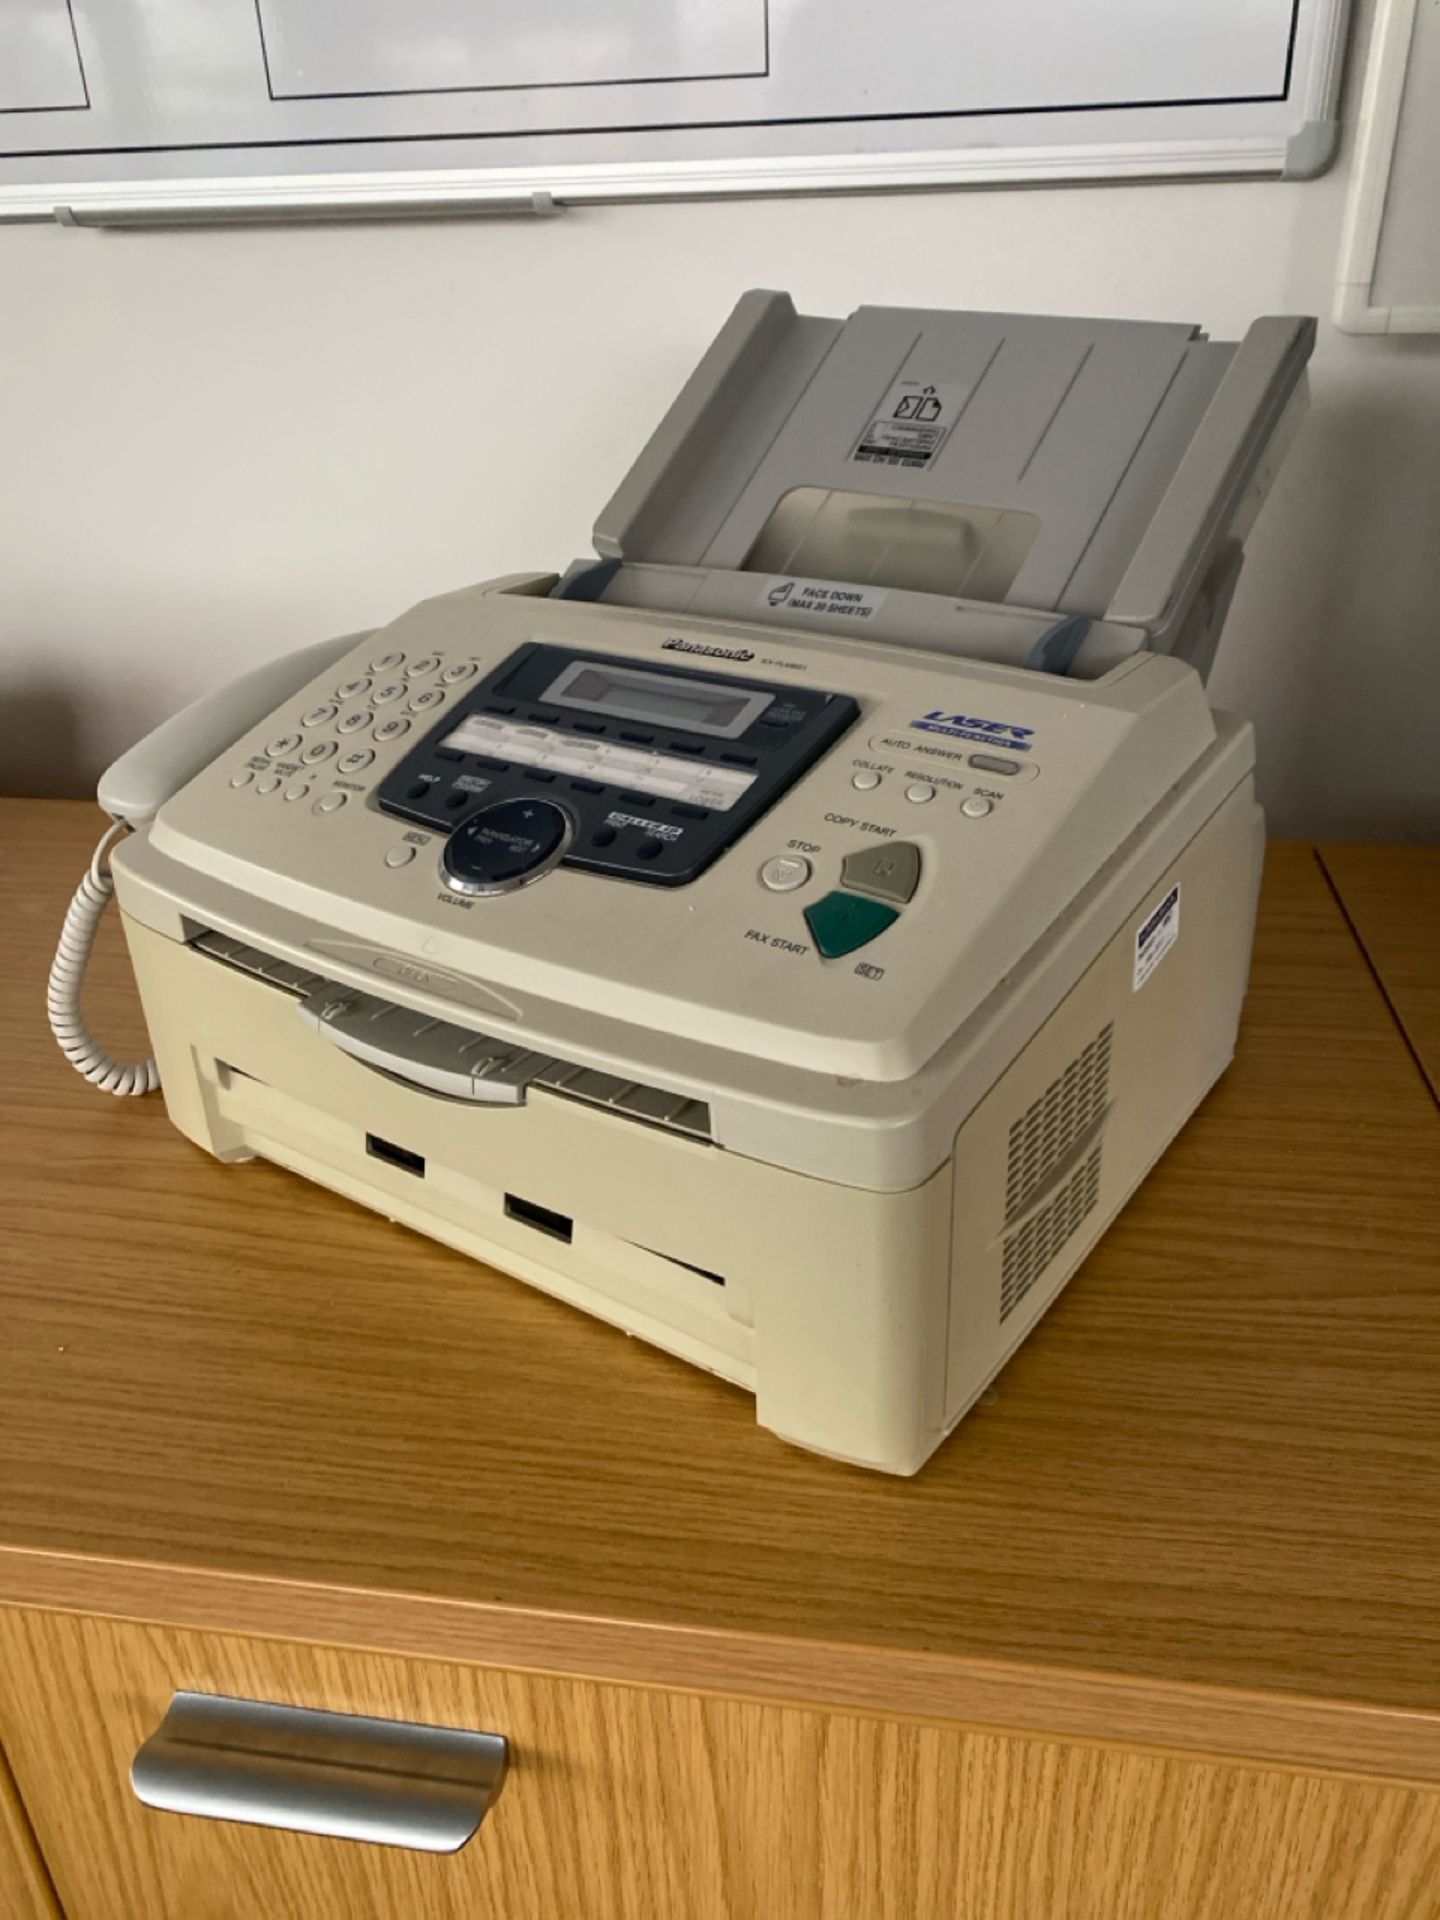 Panasonic KX-FLM651 Fax Machine - Image 4 of 5